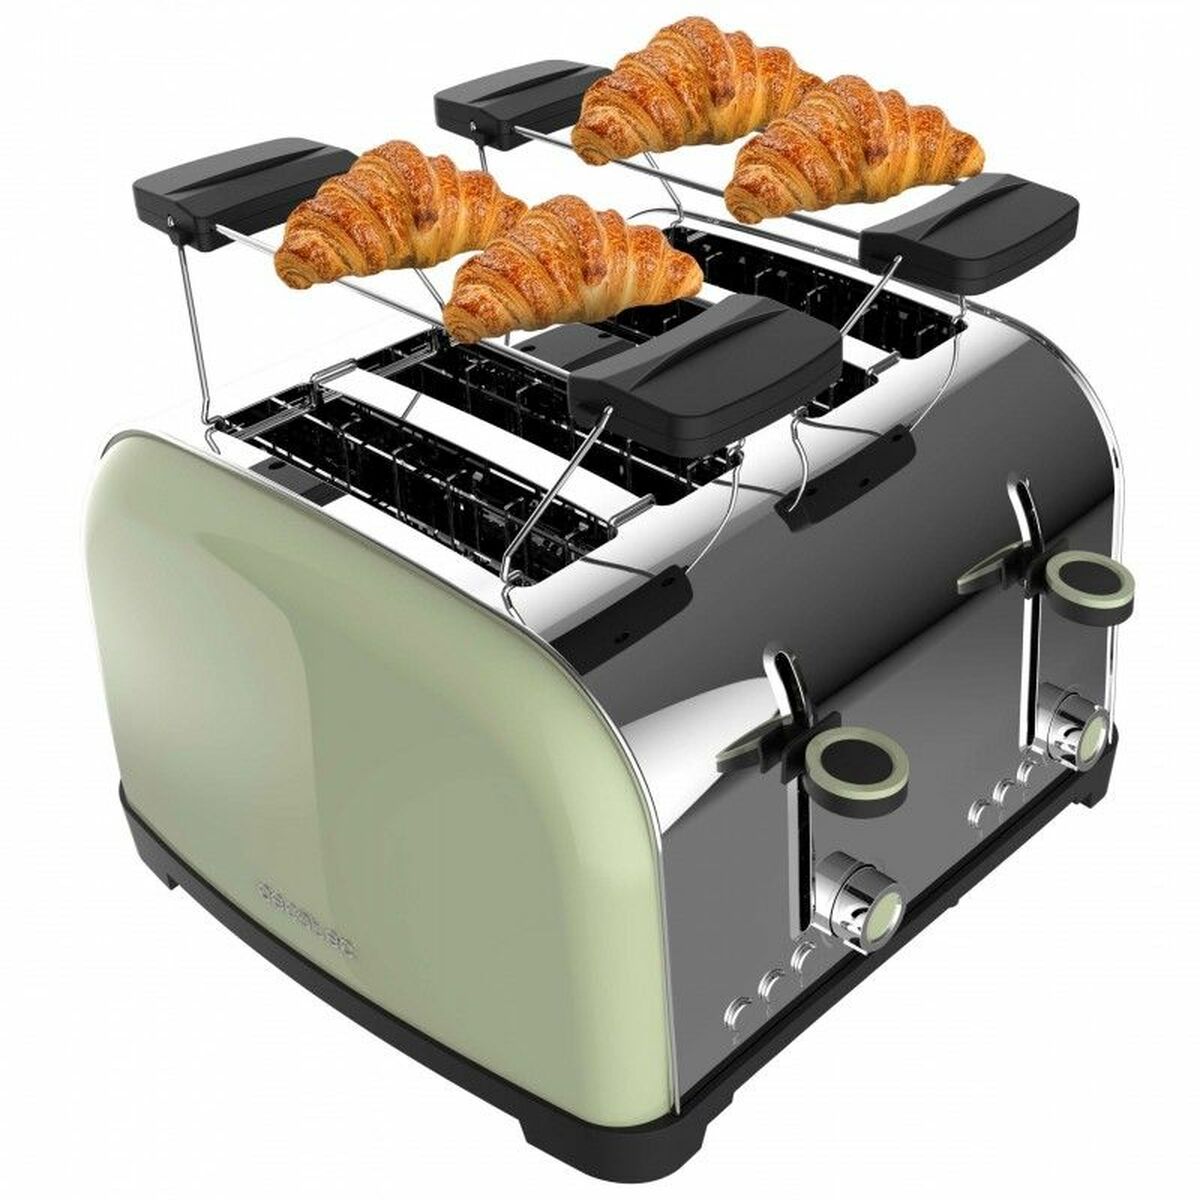 Toaster Cecotec oastin' time 1700 Double 1700 W - CA International 